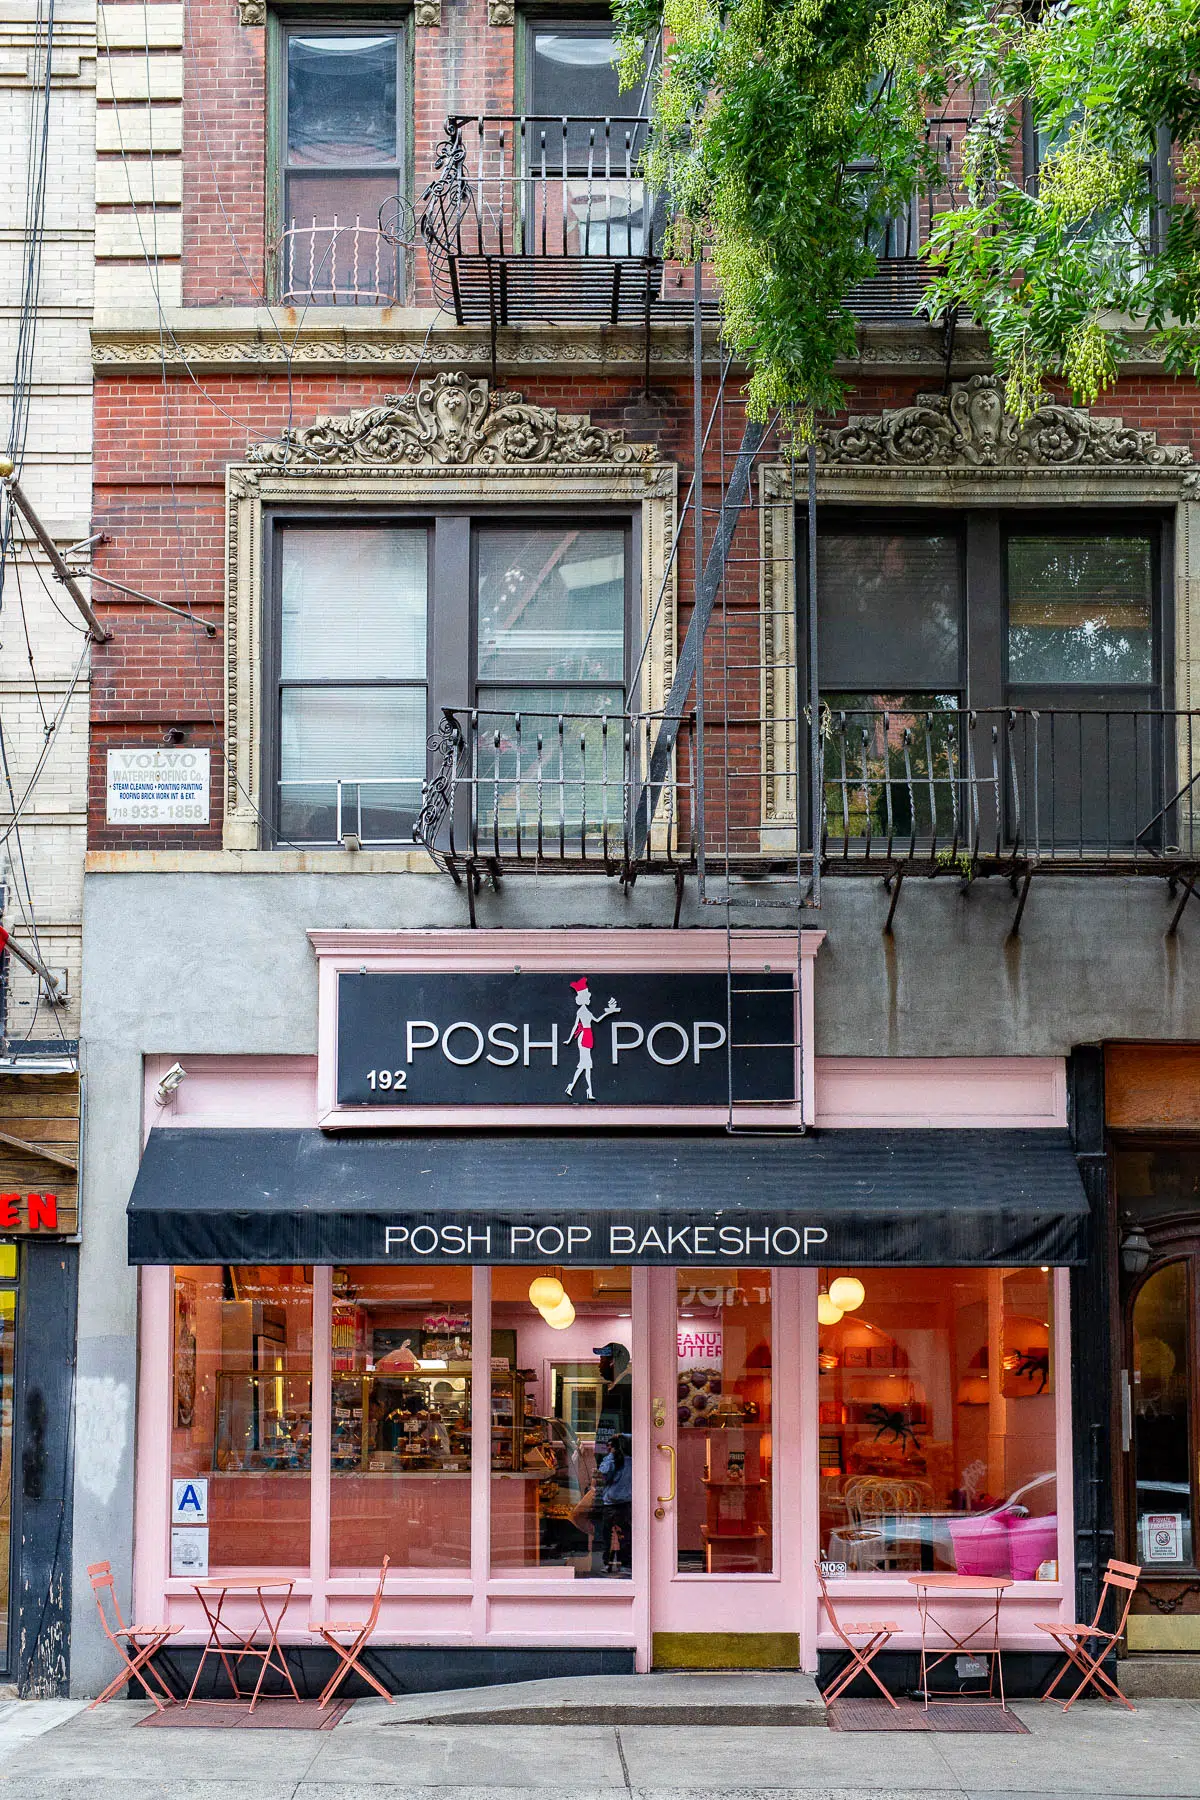 Posh Pop Bakeshop exterior